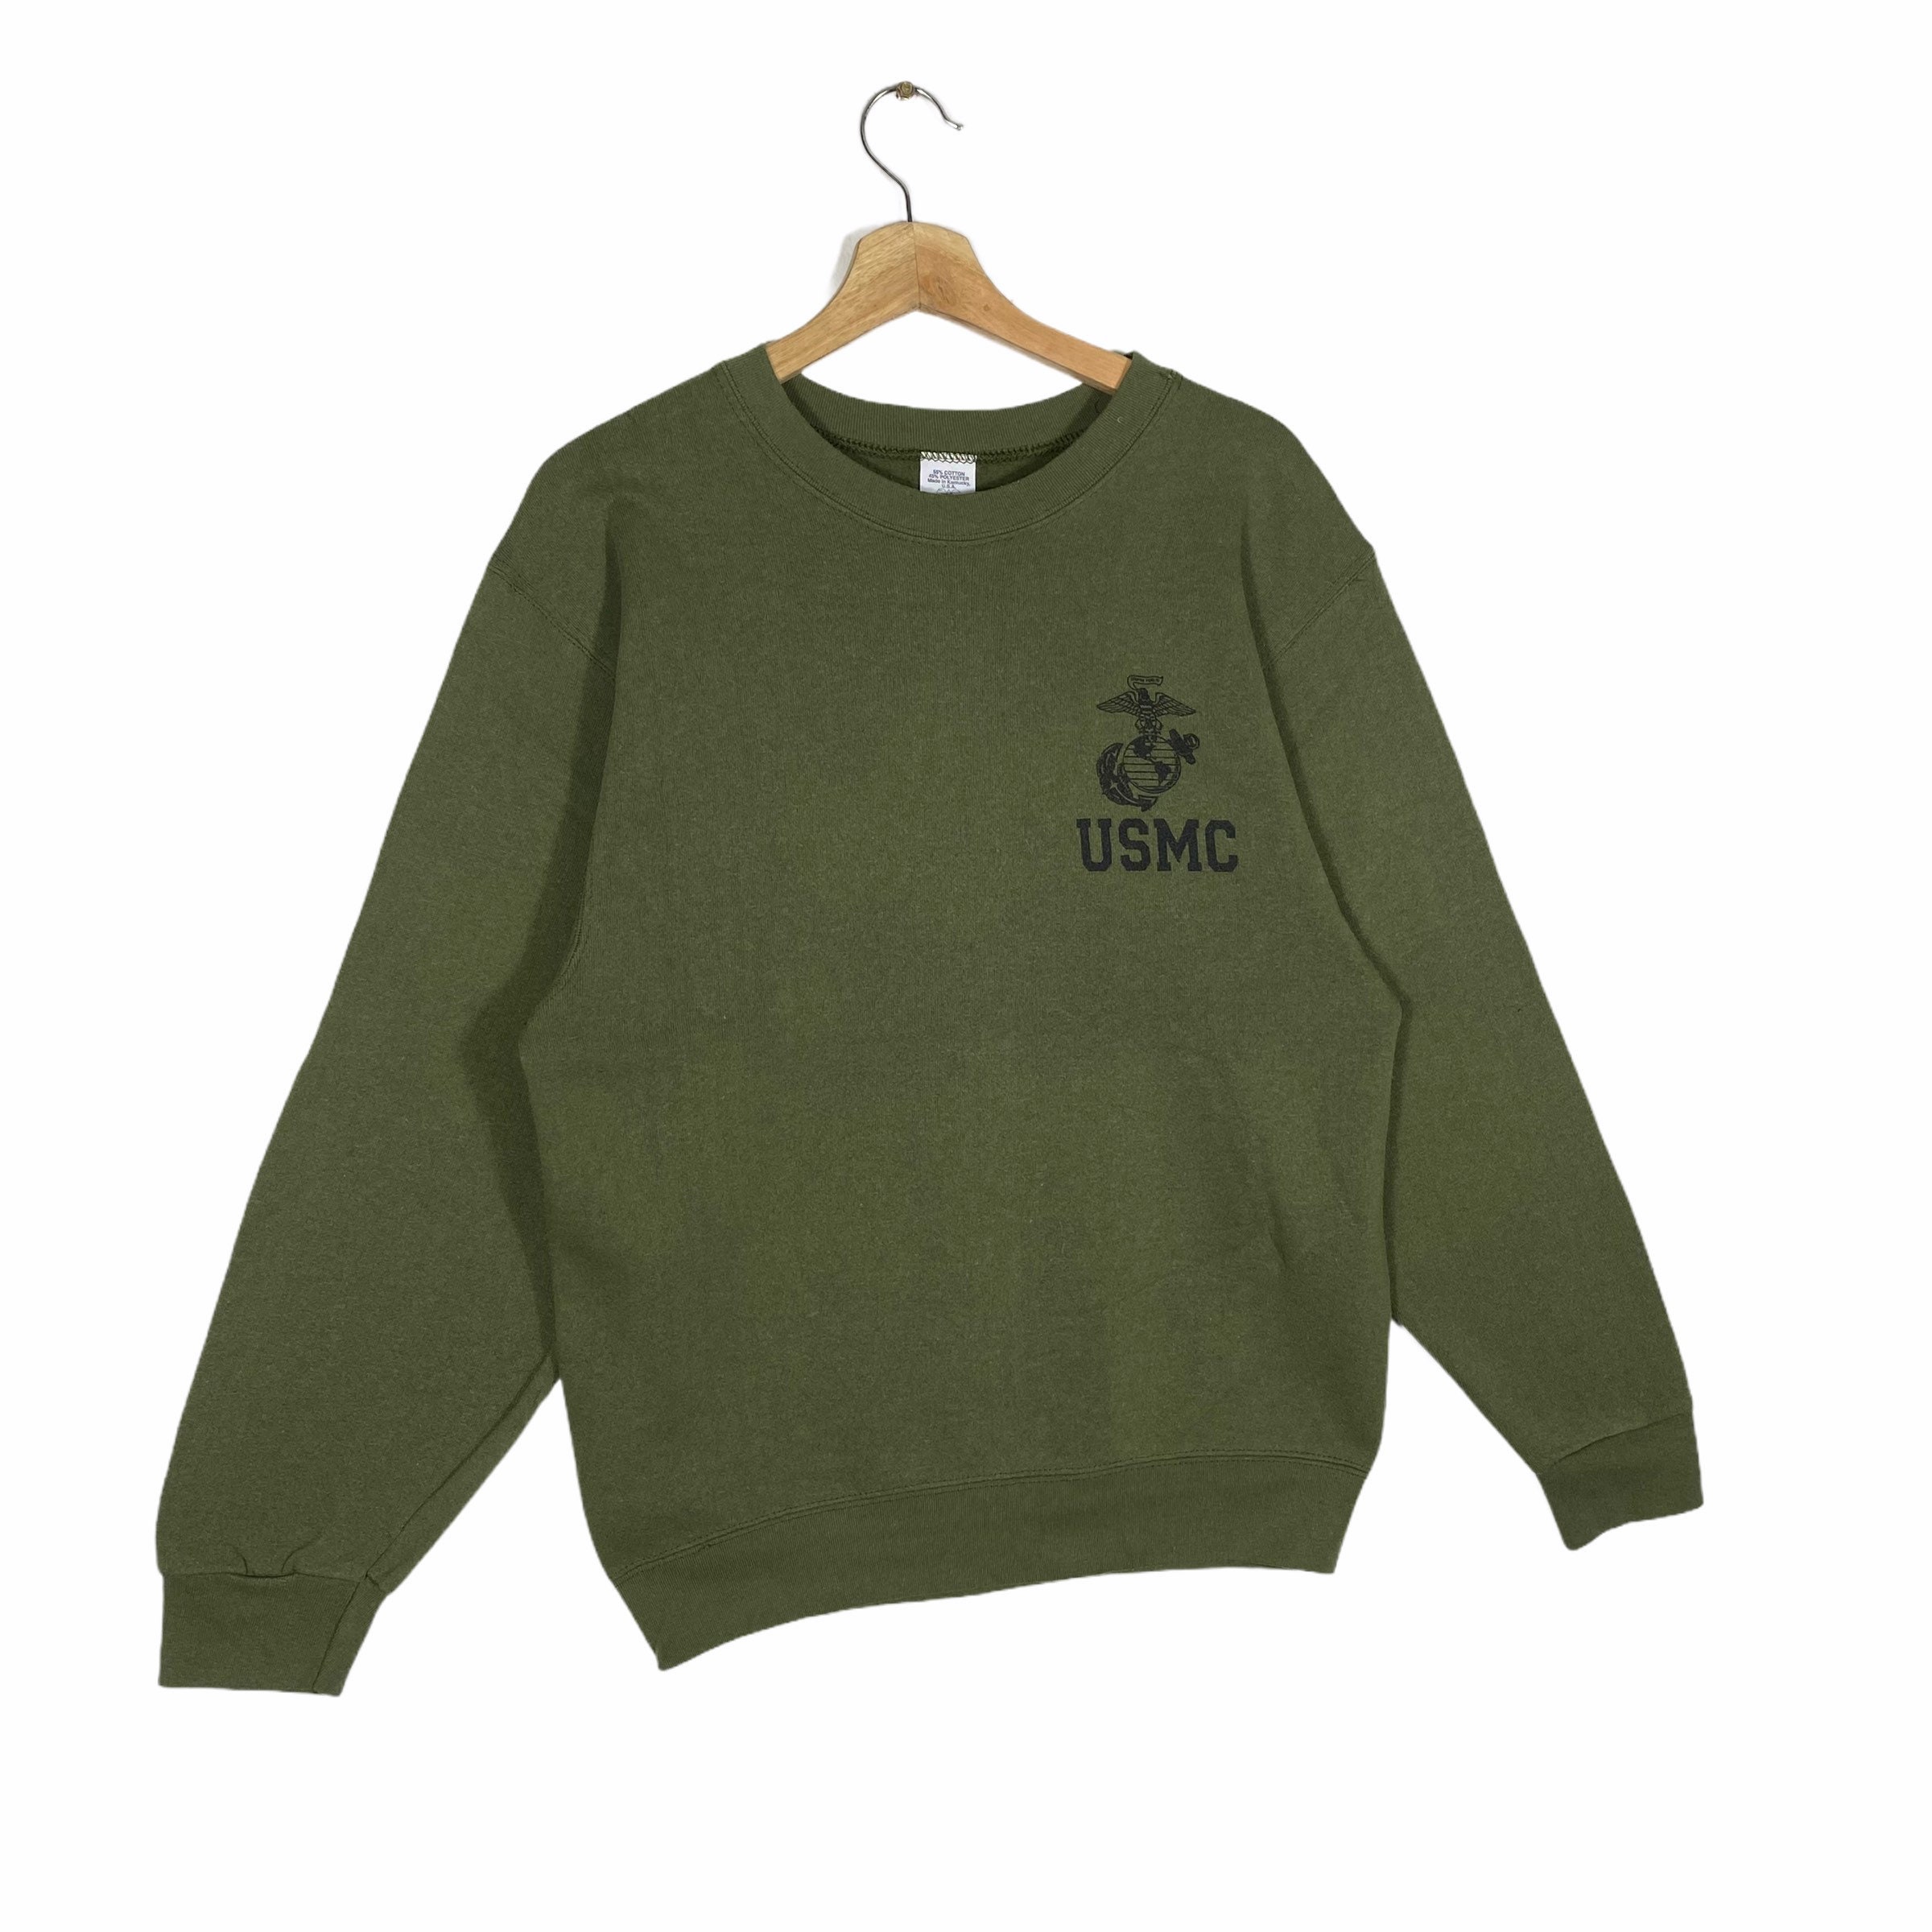 Vintage 90s Usmc United States Marine Corps Sweatshirt S Size ...